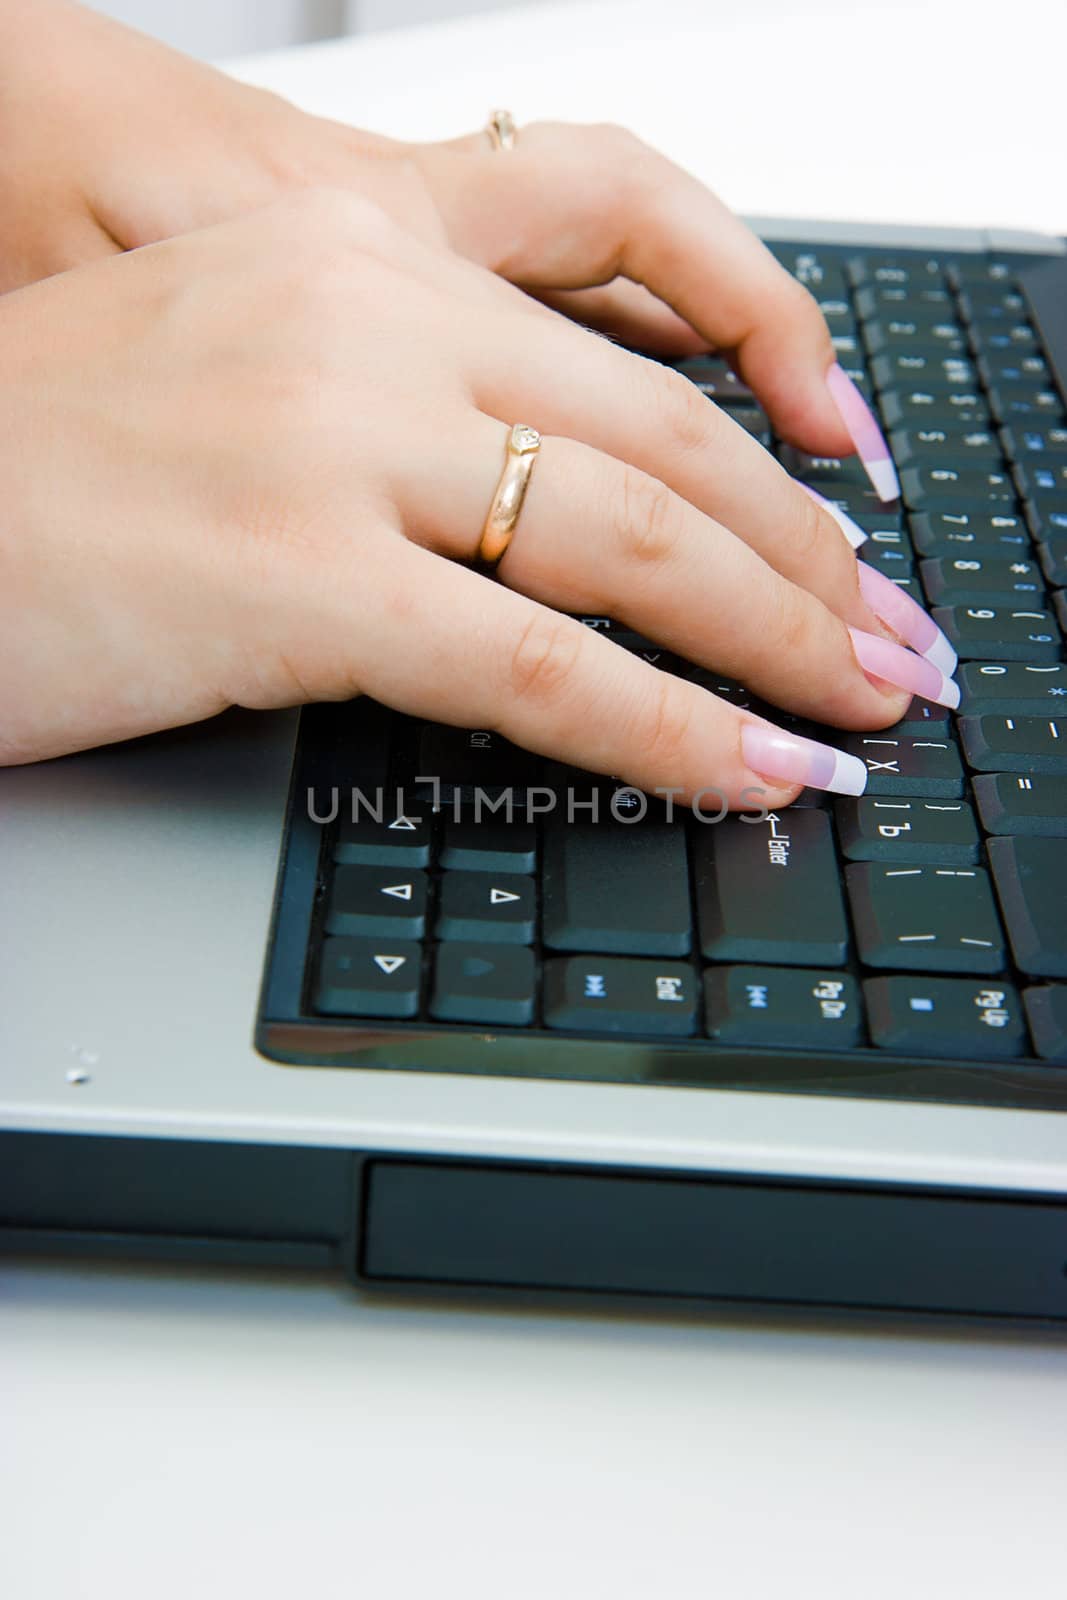 Women's hands on the laptop keyboard by pzRomashka